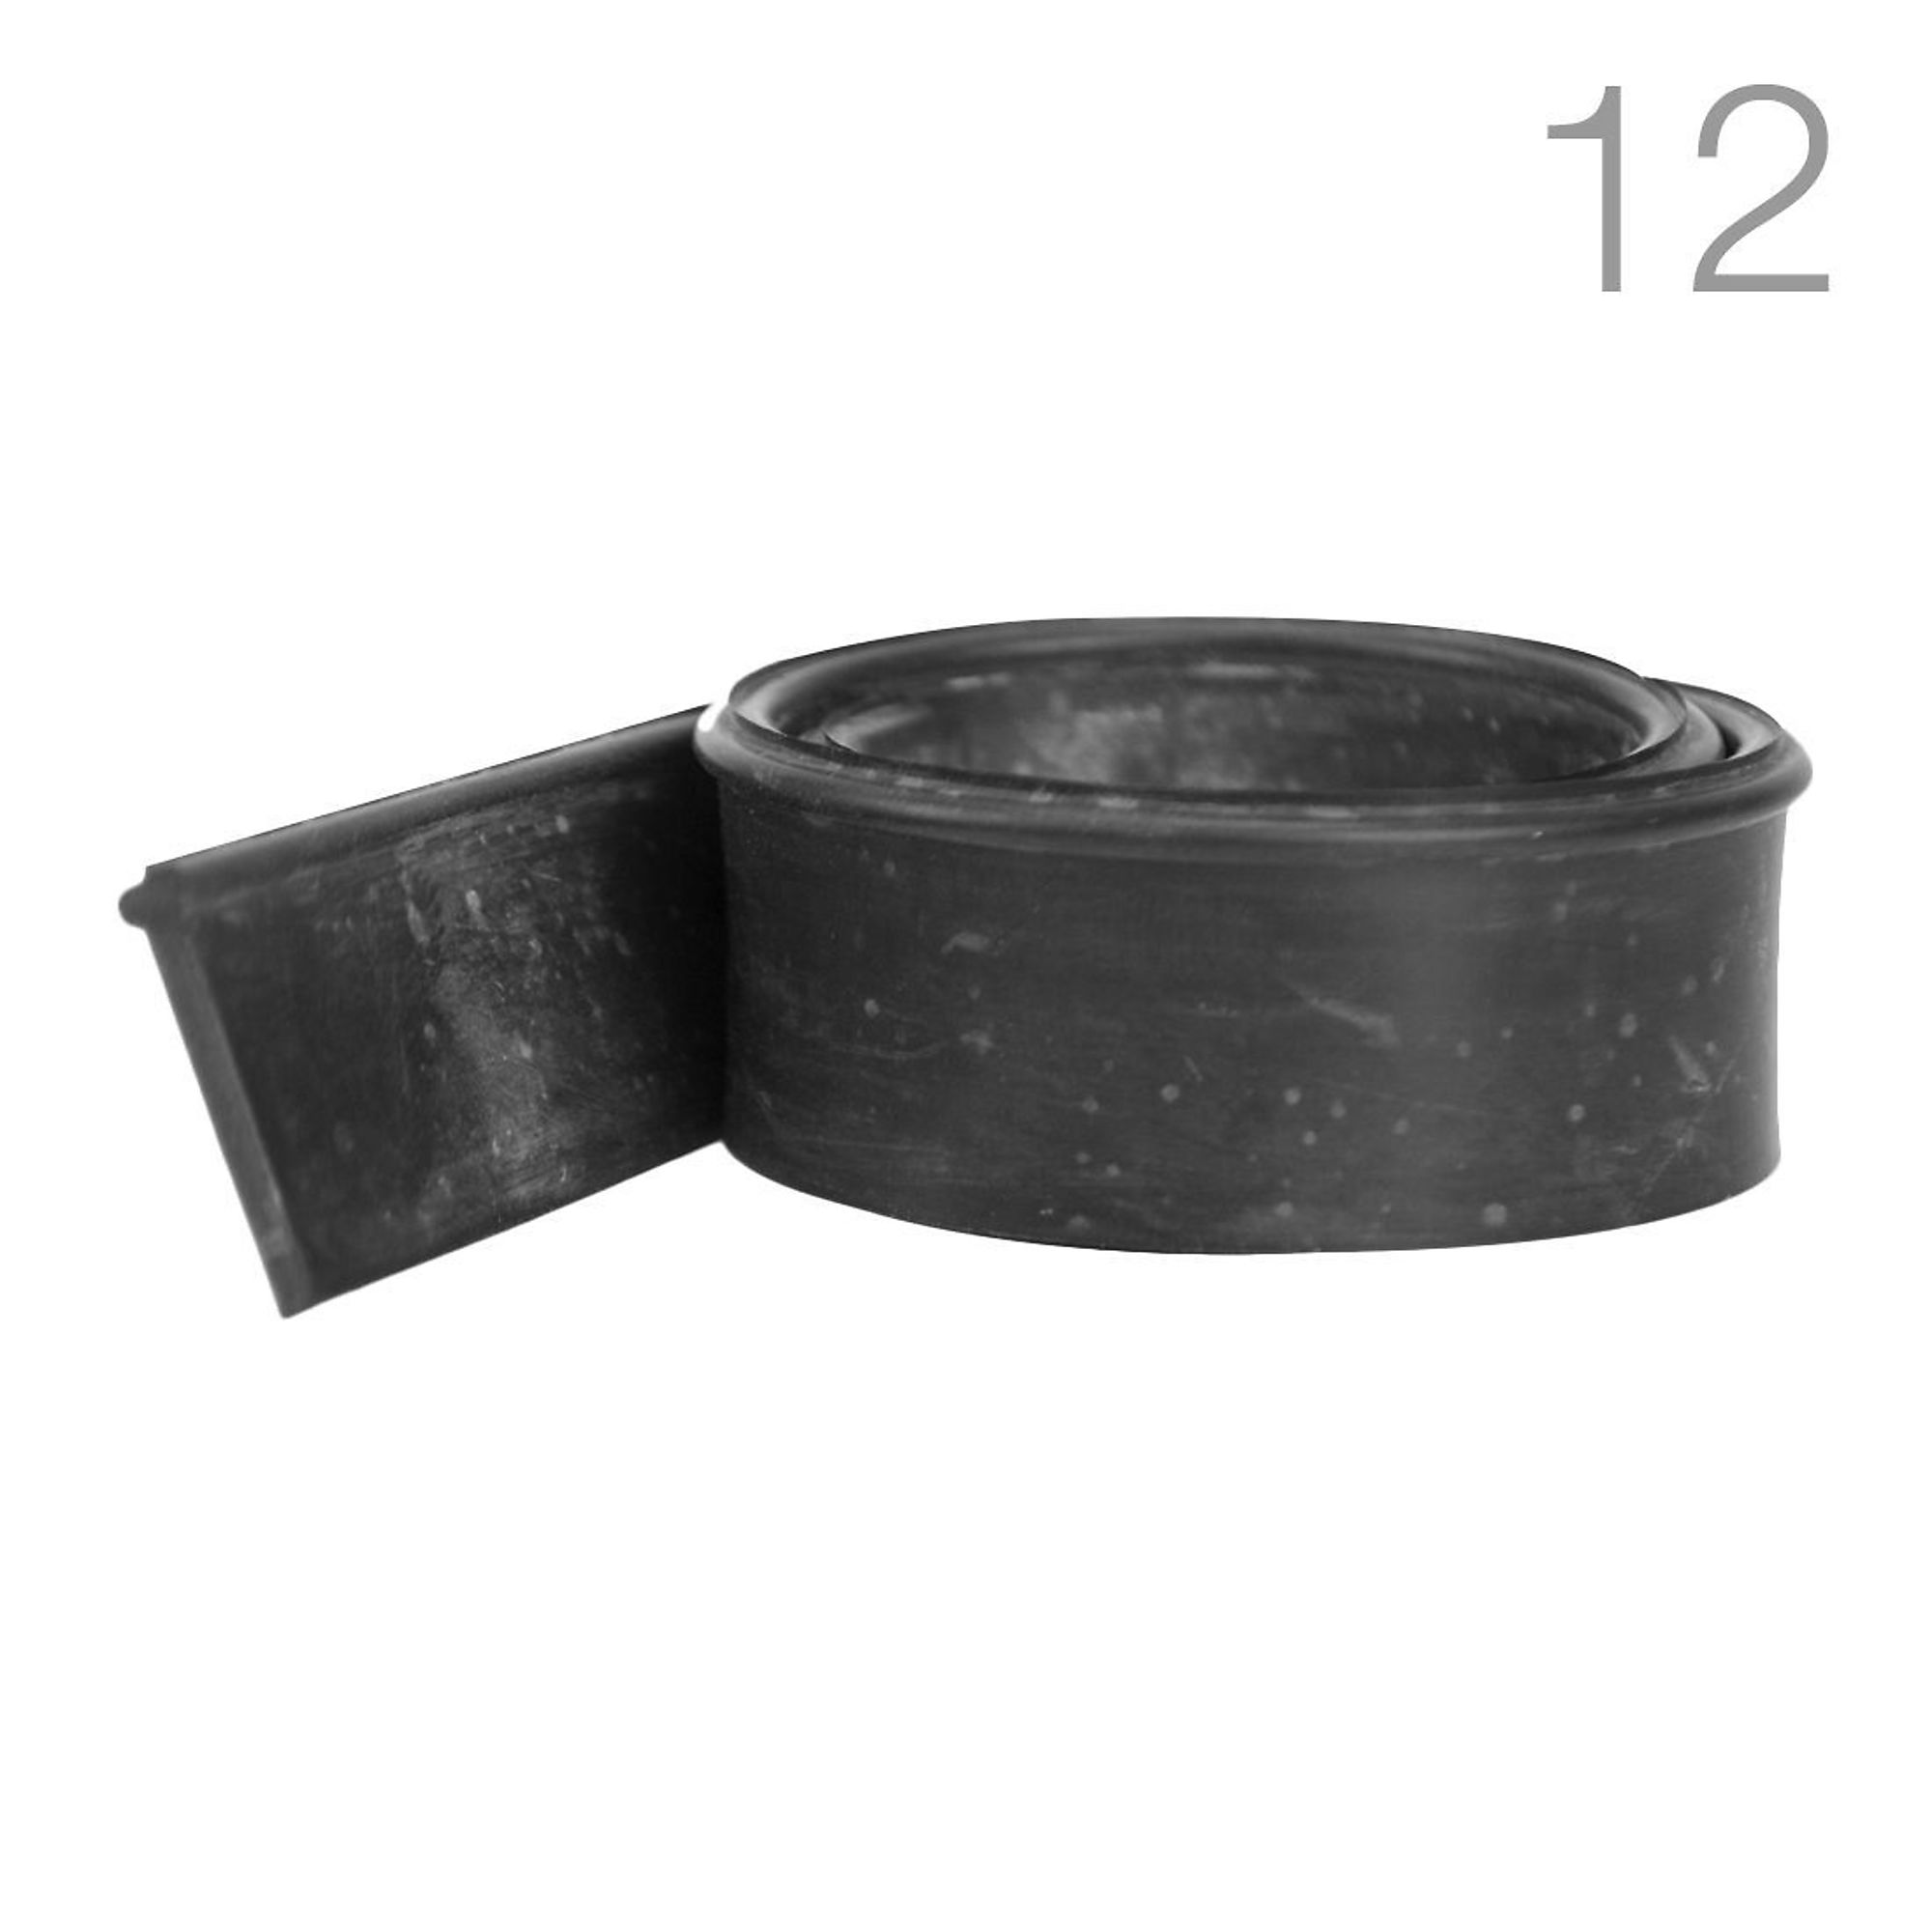 BlackDiamond, Flat Top Medium Squeegee Rubber 12 Pack - 24Inch, Model 012-05-52